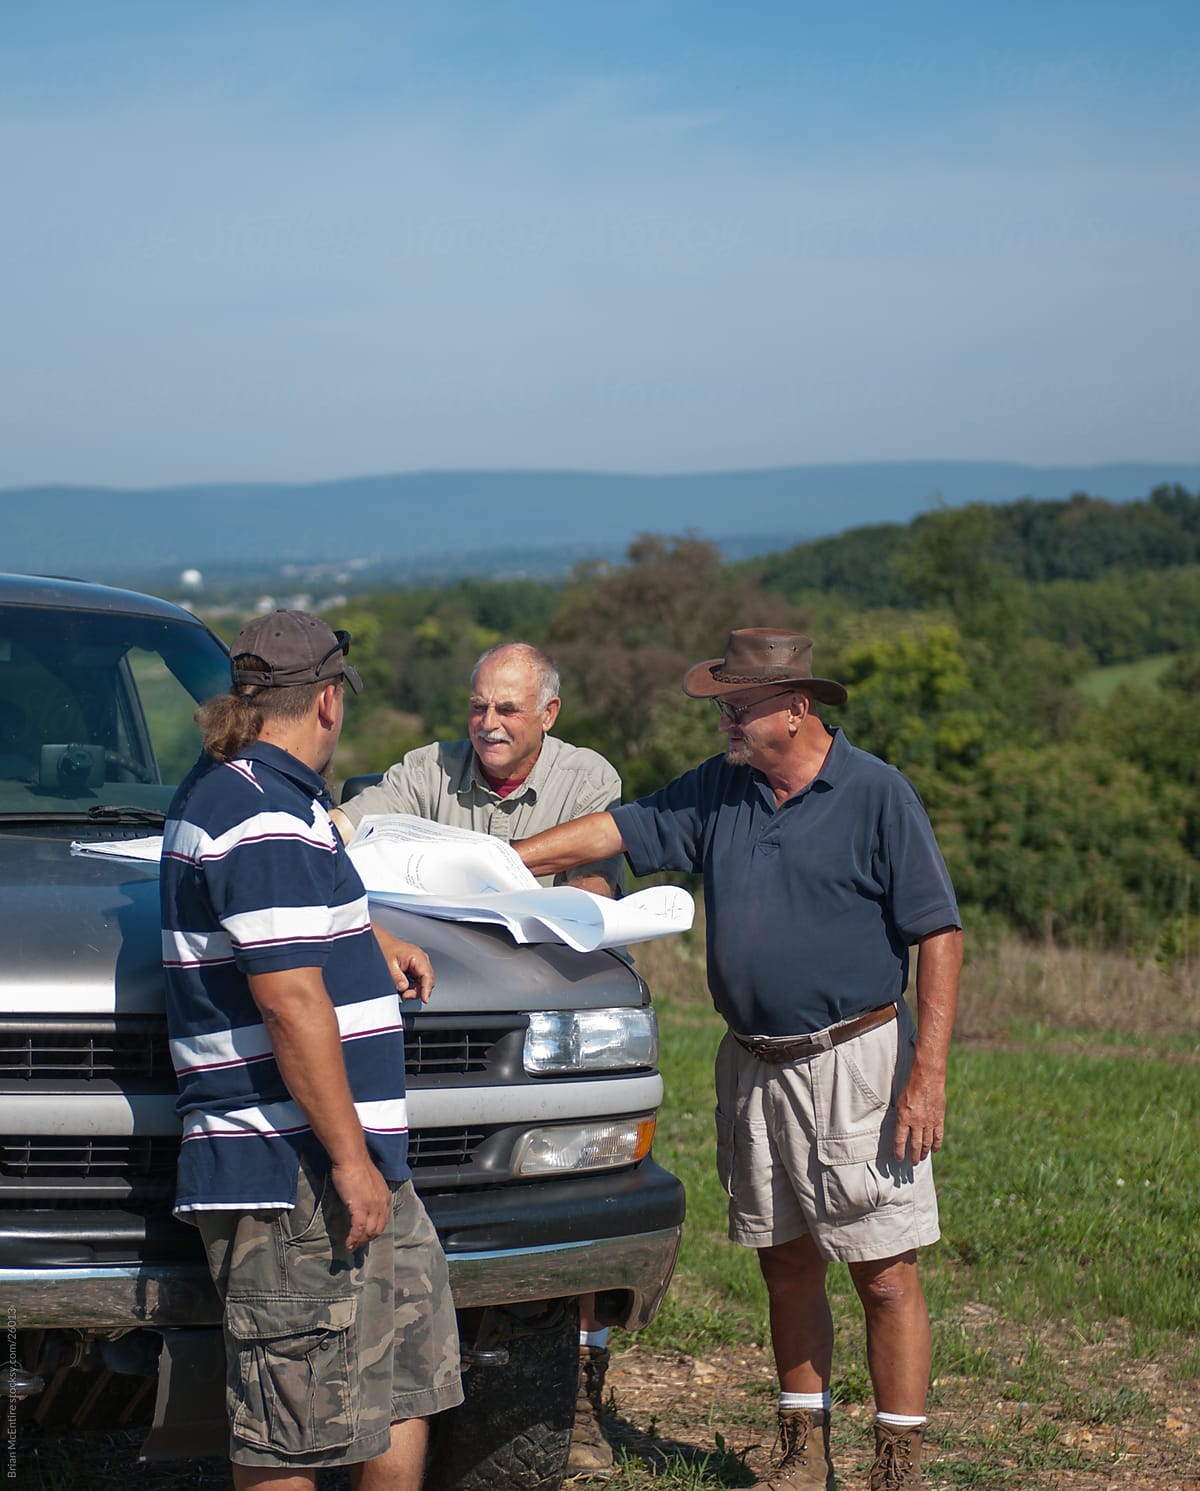 Land Survey Crew Examines Blue Prints on Truck